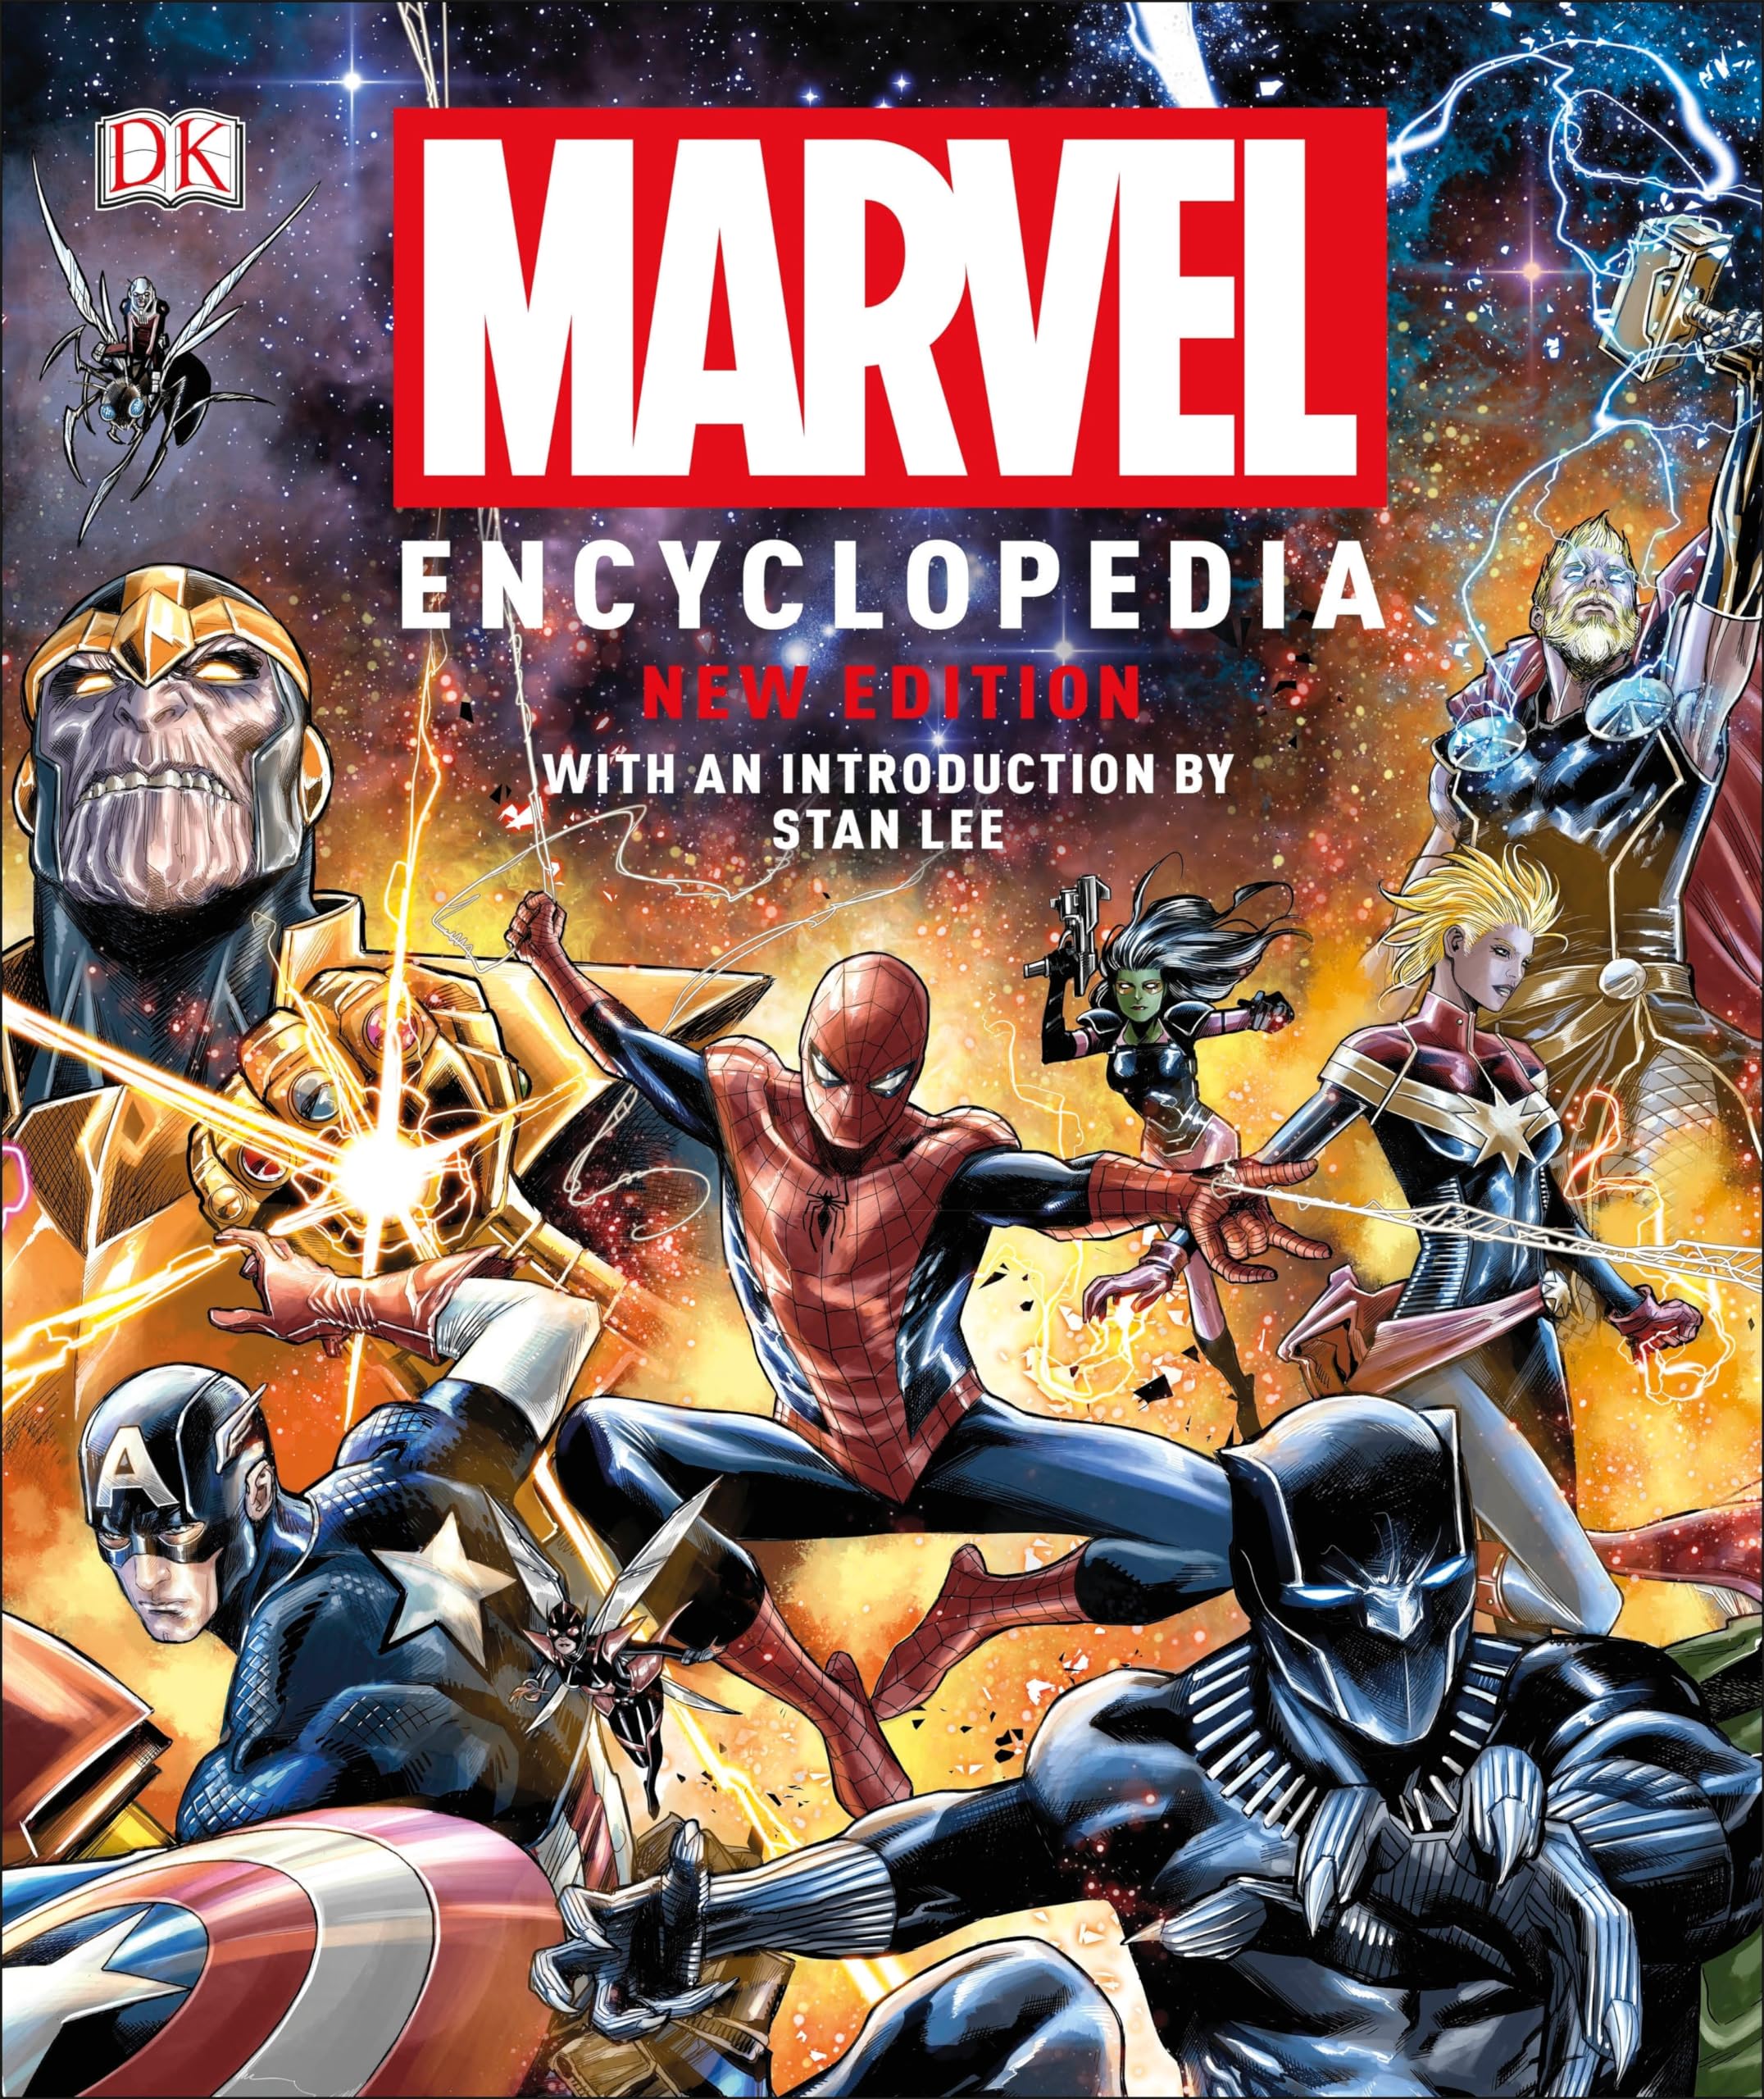 Marvel Encyclopedia New Edition (Kindle, Apple IOS, Google Play) $2